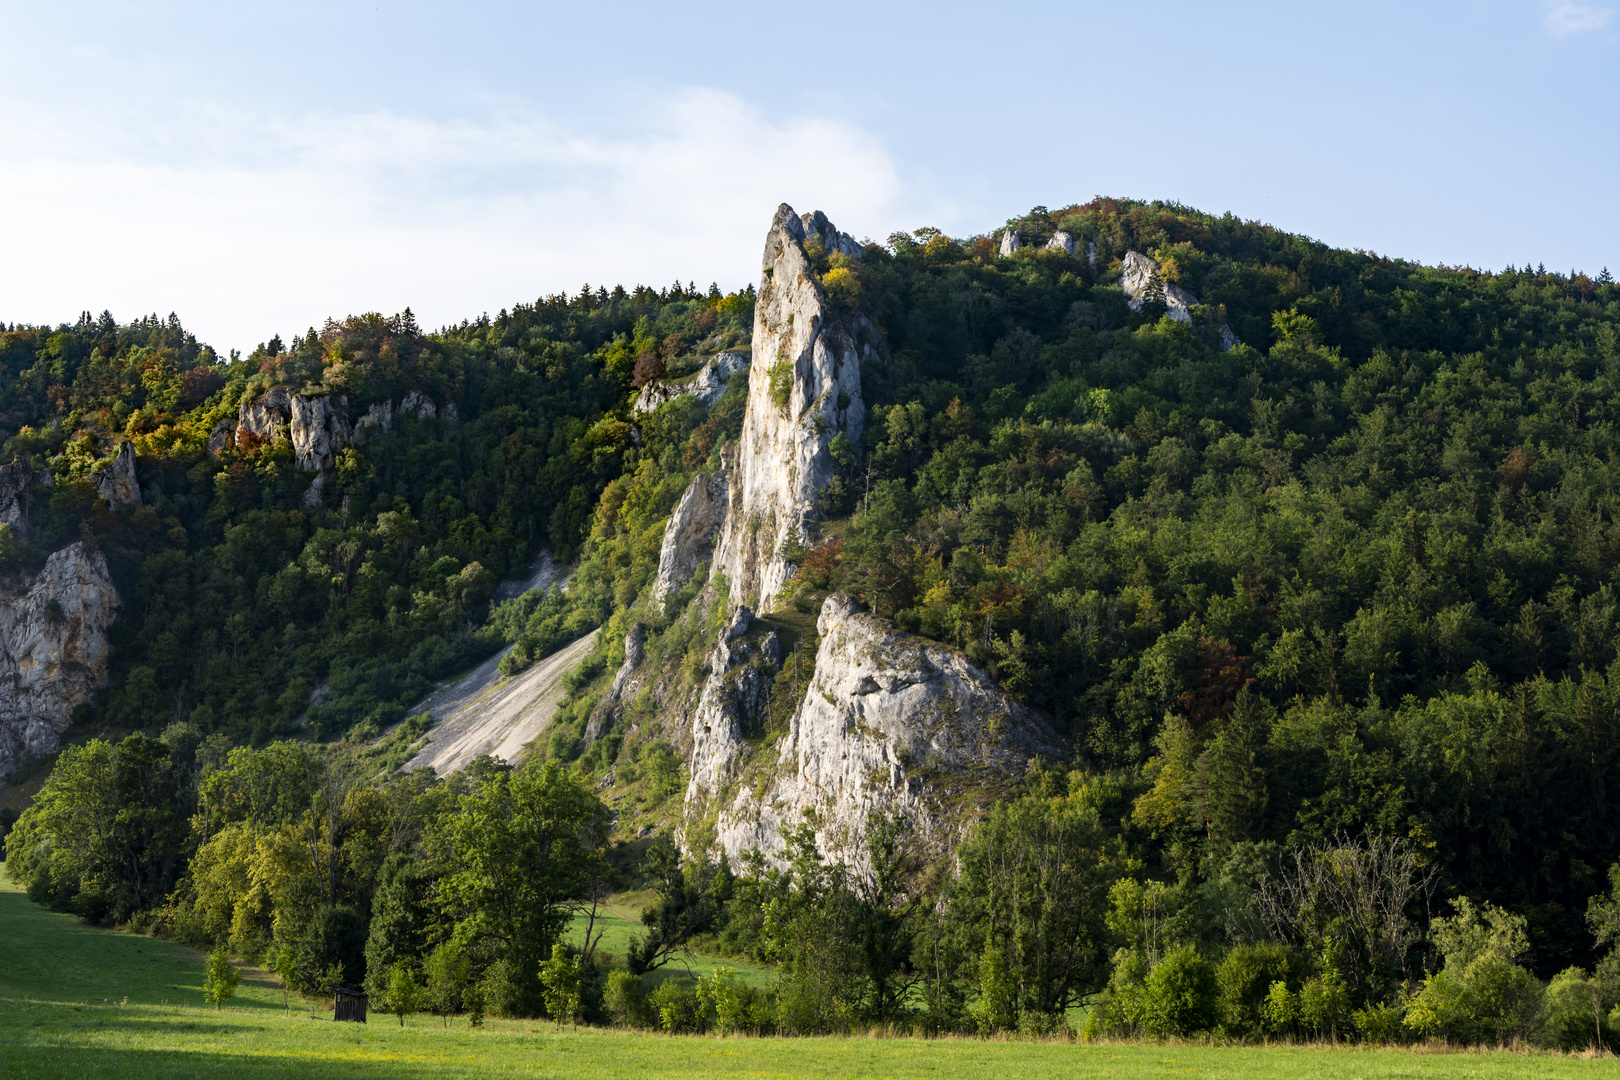 Grandioser Ausblick im Naturpark obere Donau